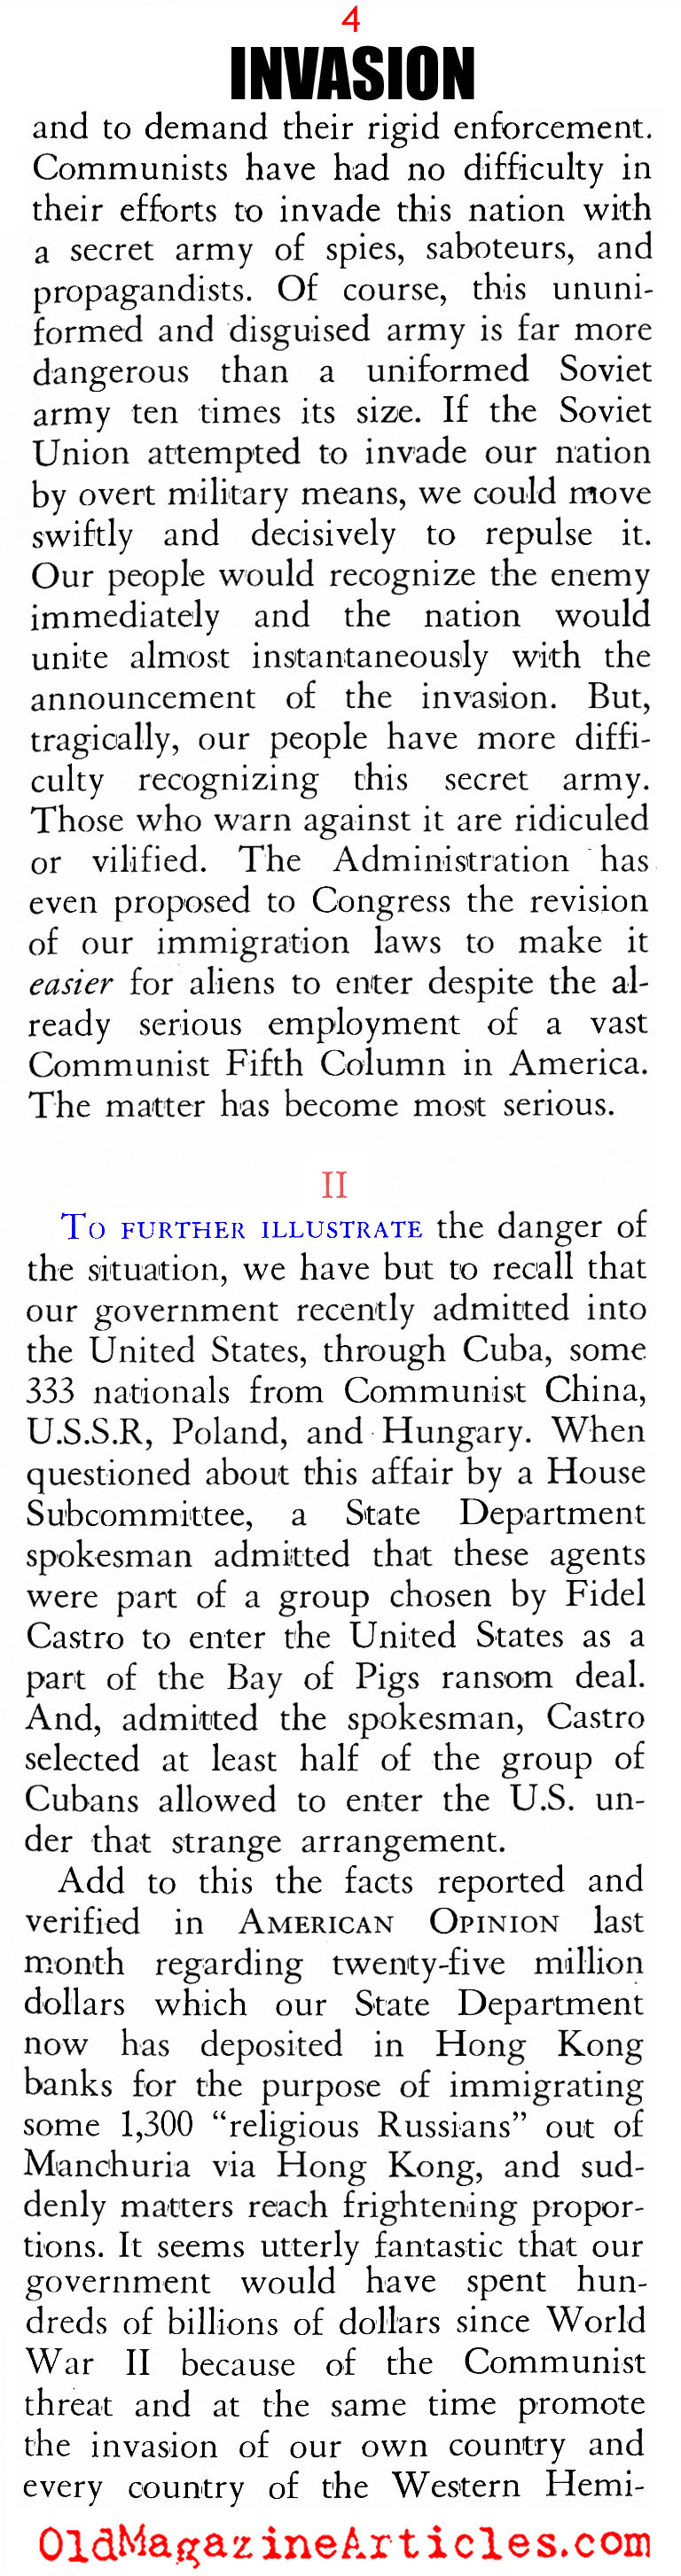 Russia's Fifth Column in America (American Opinion, 1964)